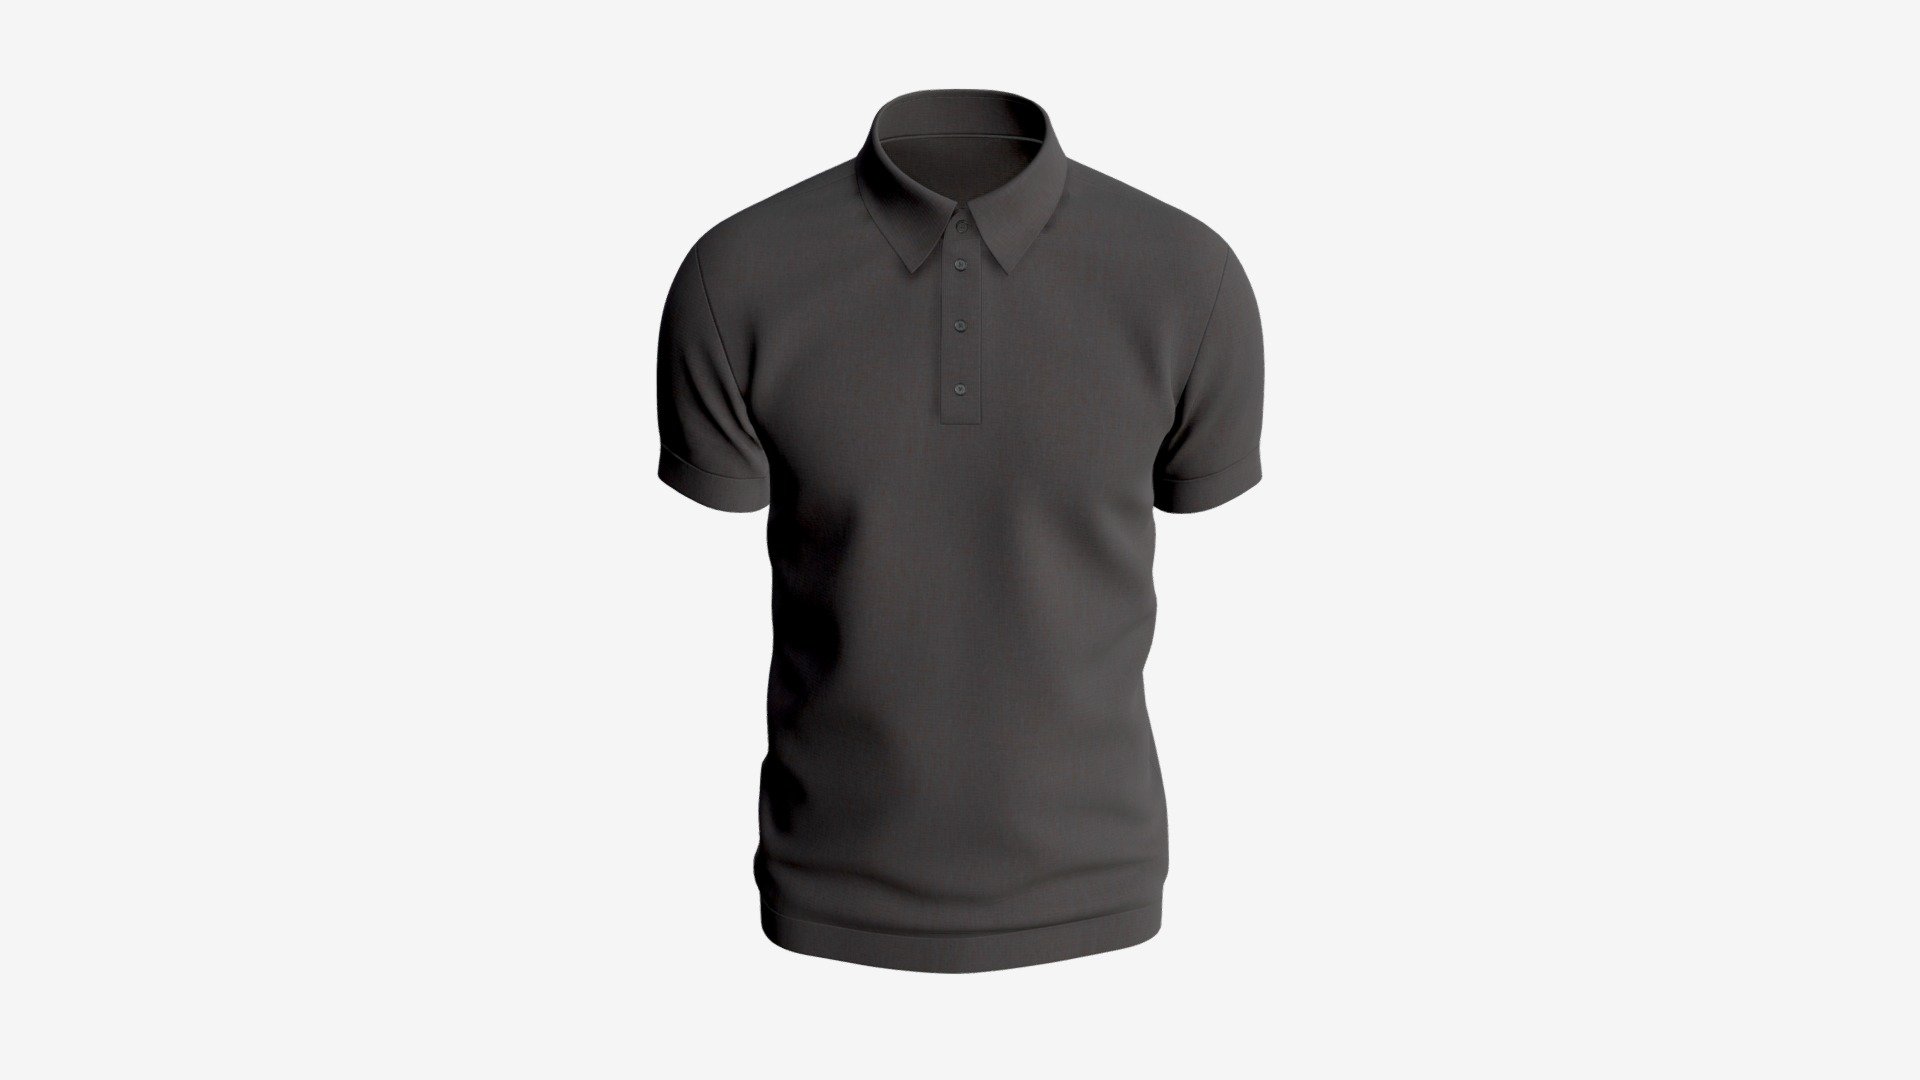 Short Sleeve Polo Shirt for Men Mockup 02 Black - Buy Royalty Free 3D ...